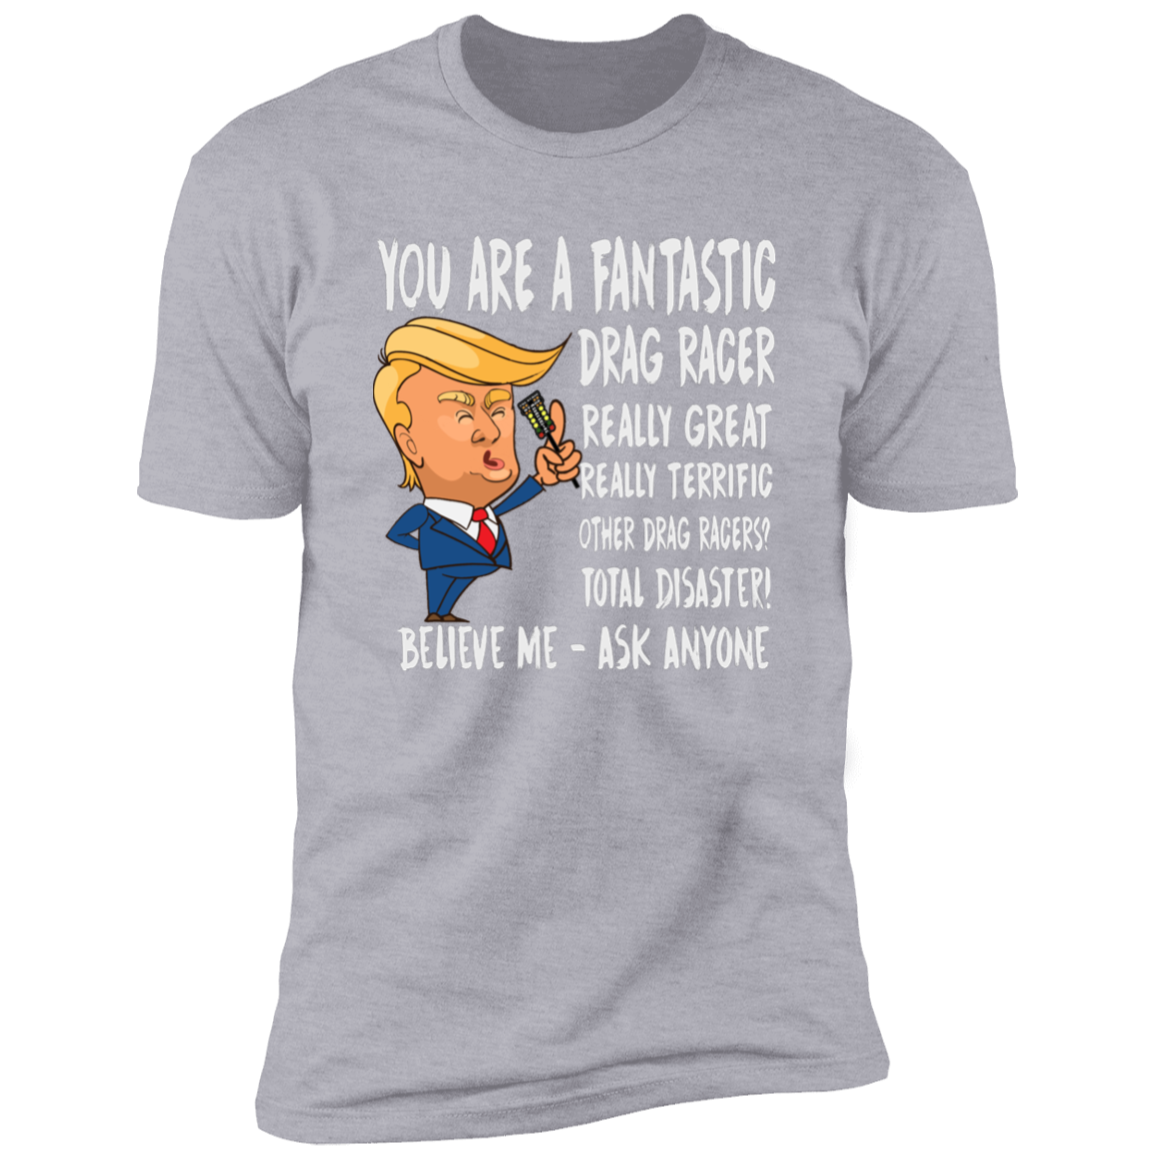 You're A Fantastic Drag Racer T-Shirts